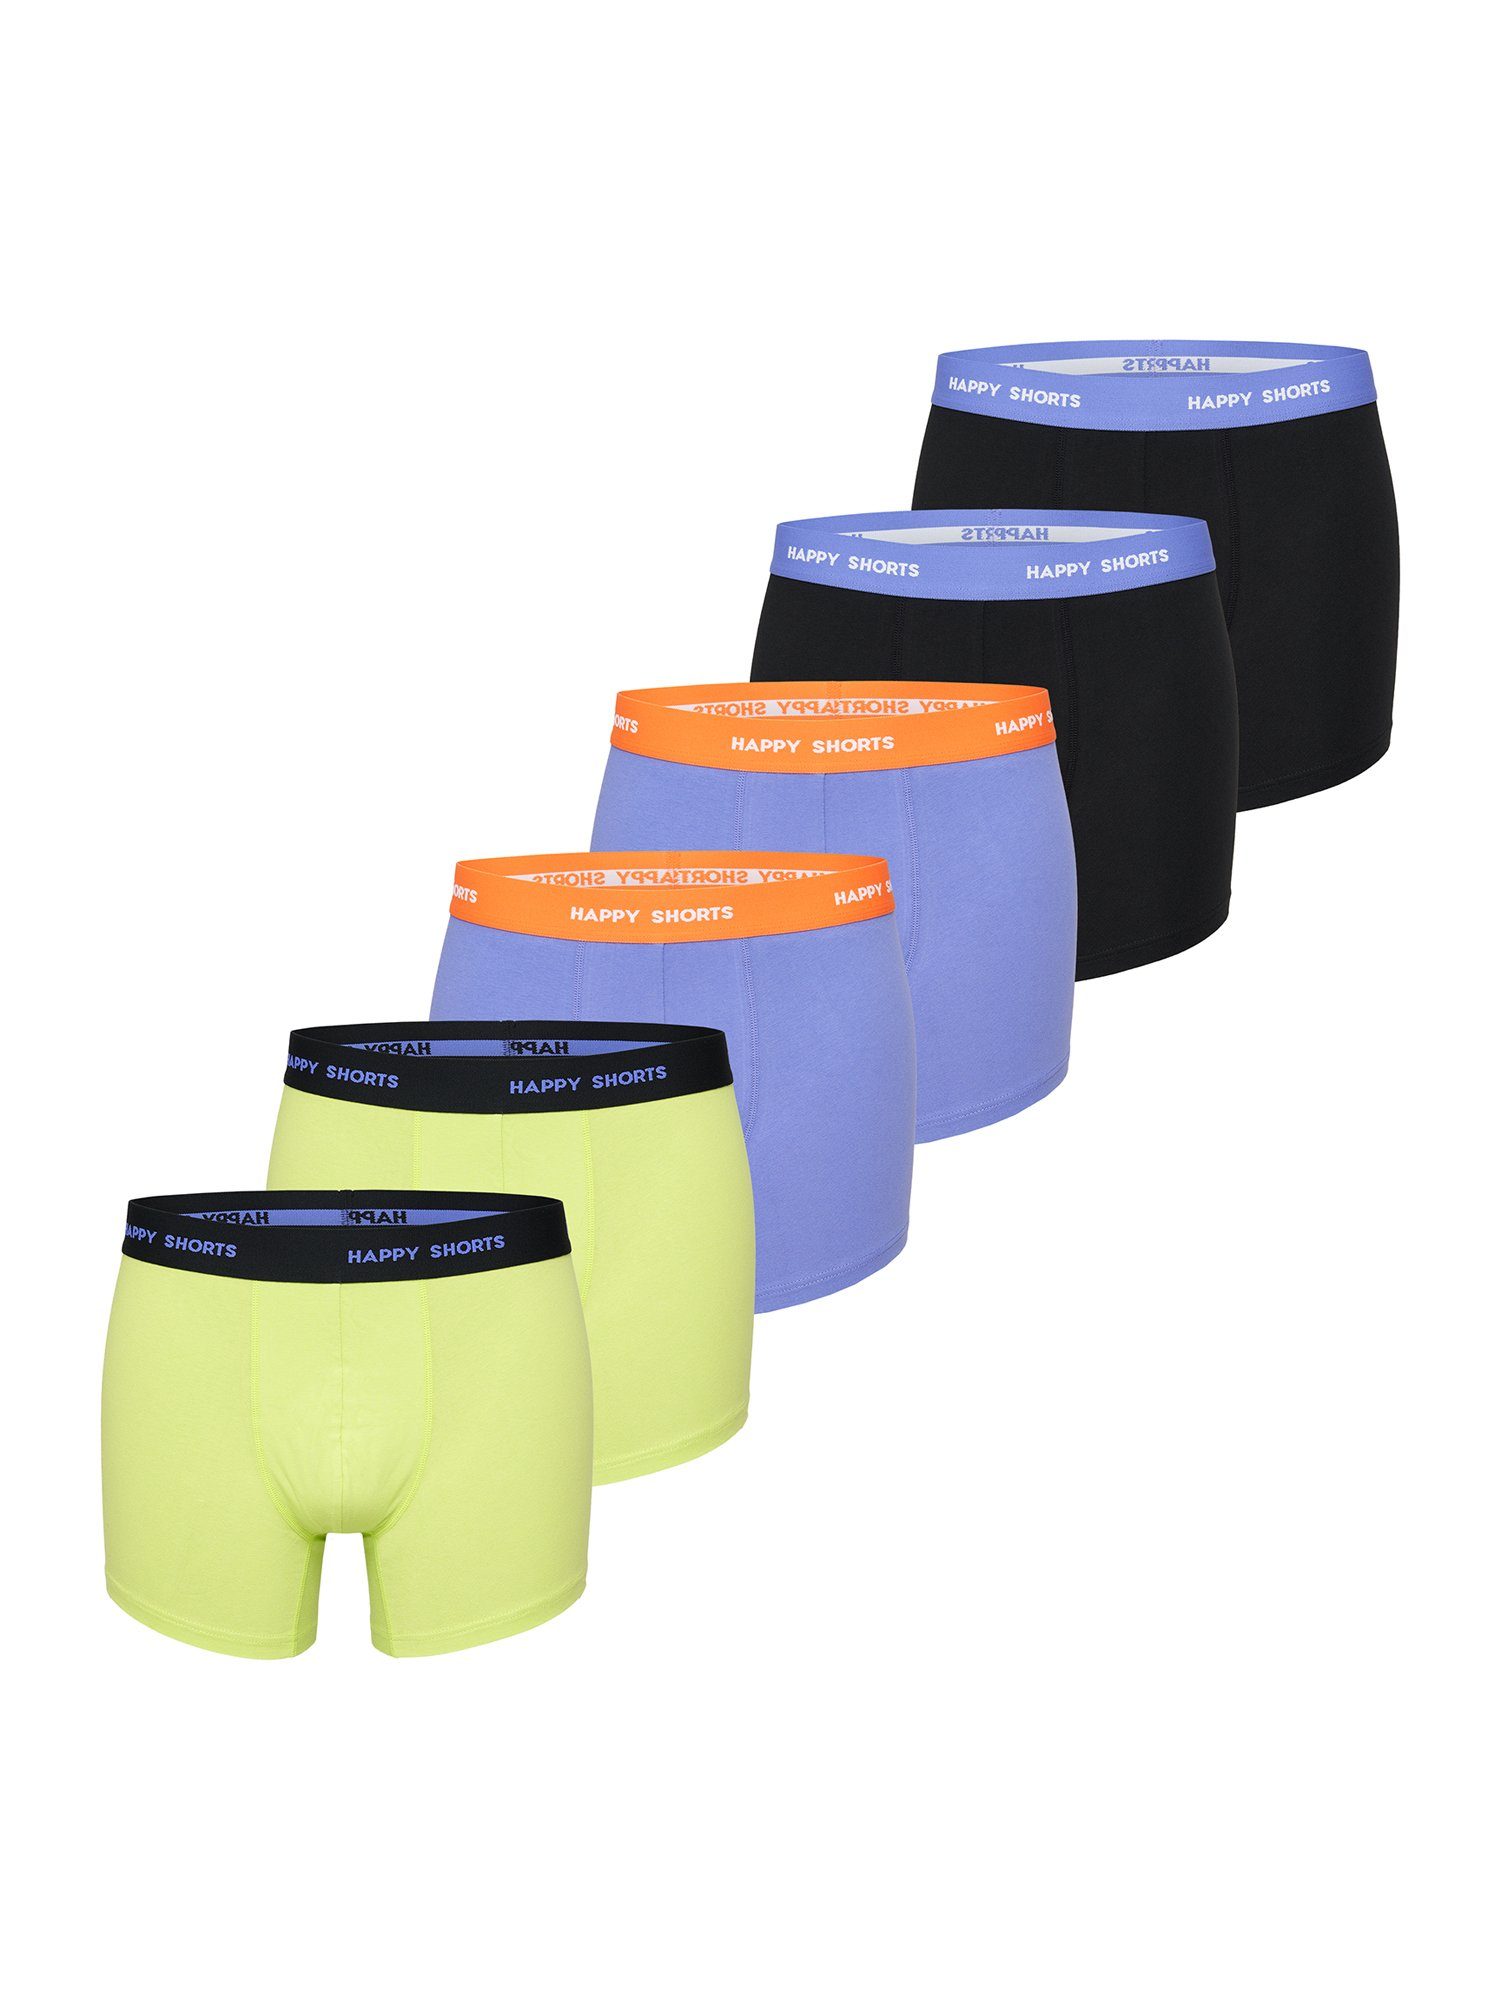 HAPPY SHORTS Retro Pants Jersey (6-St) Retro-Boxer Retro-shorts unterhose